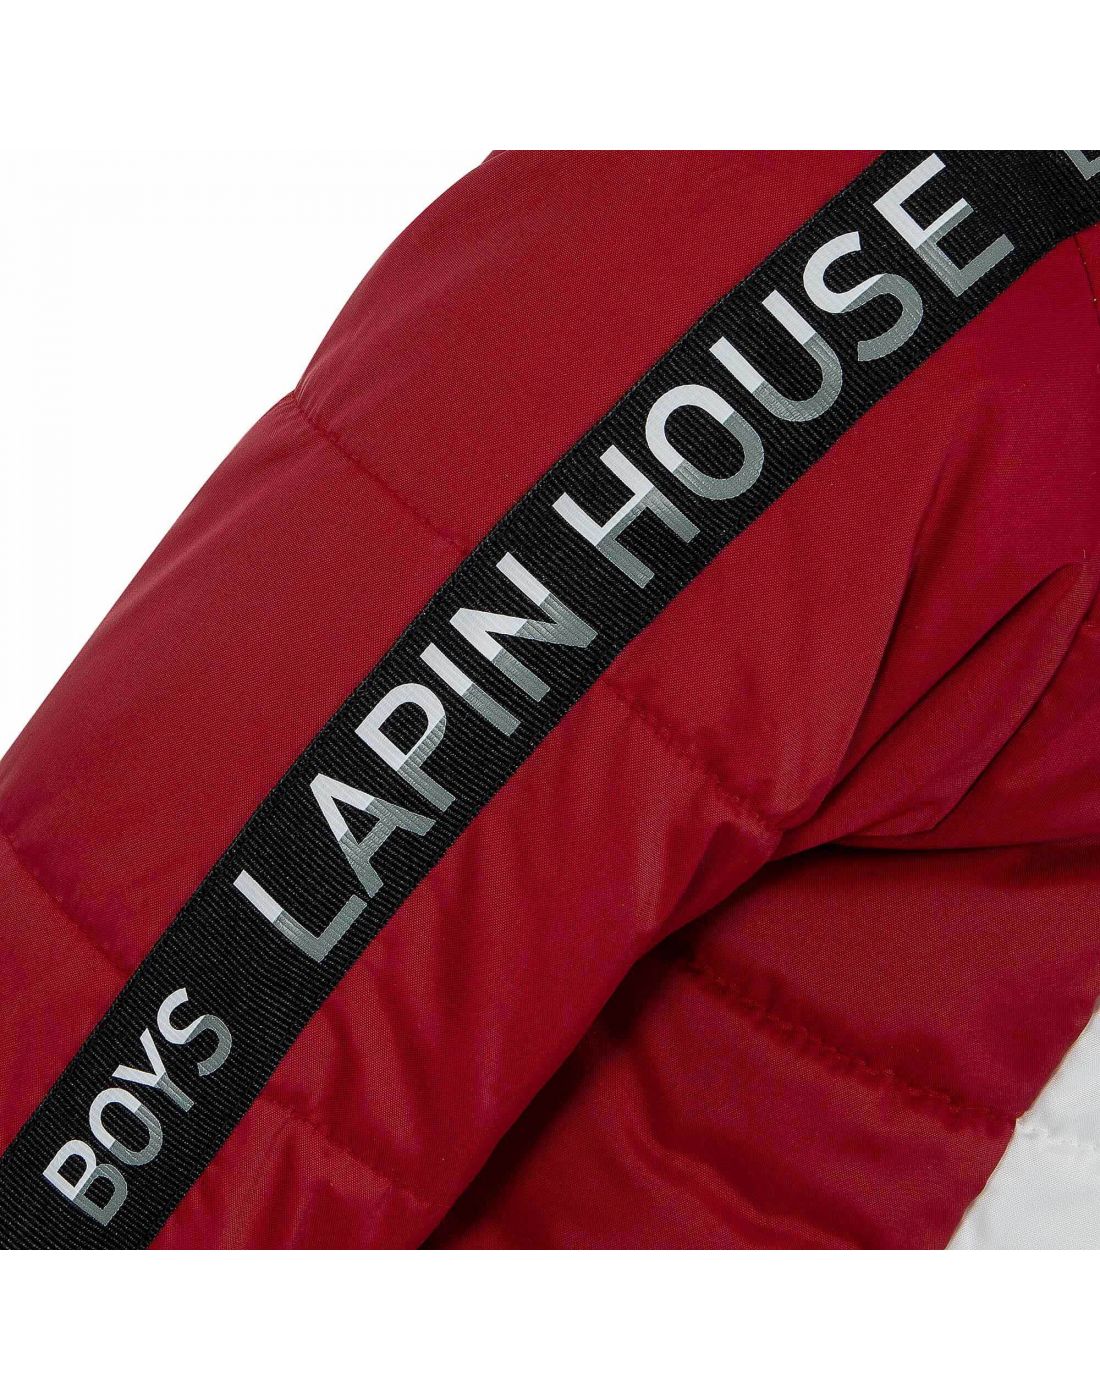 Lapin House Boys Jacket